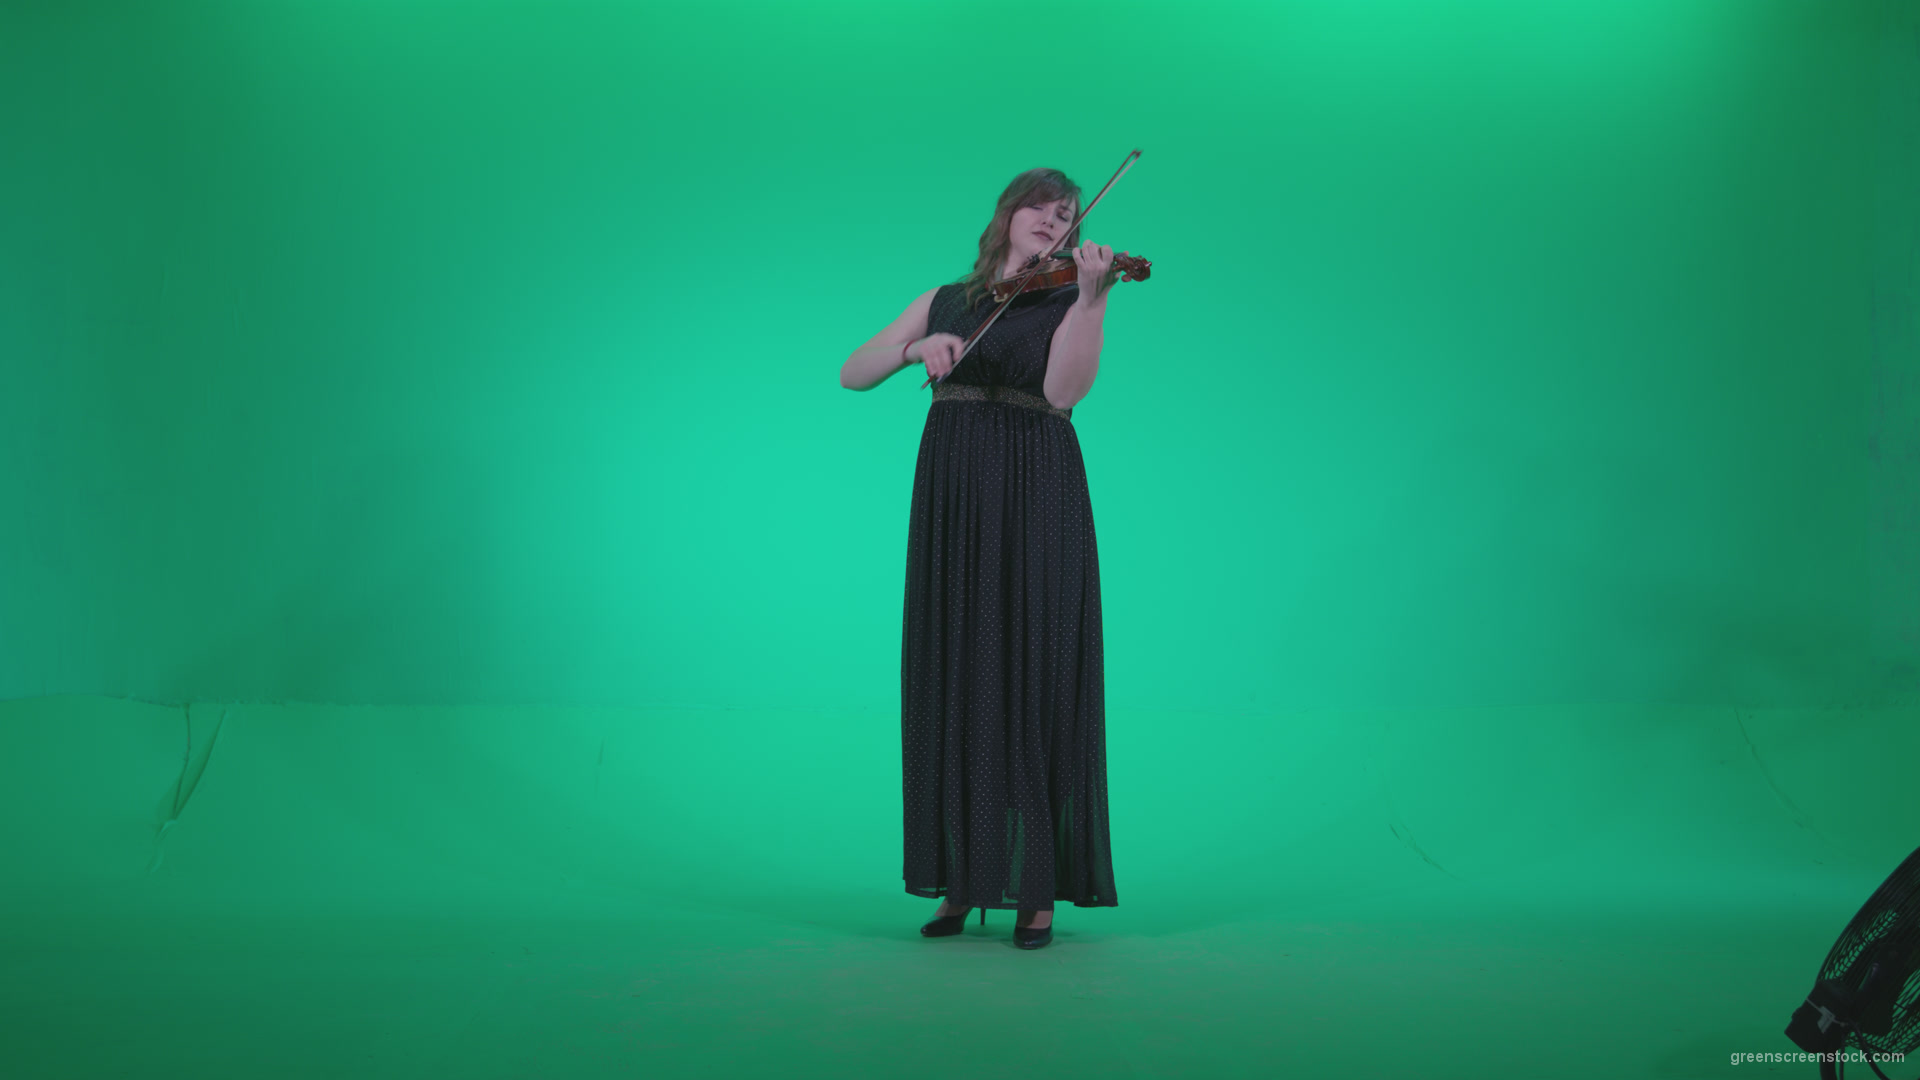 Professional-Violin-player-woman-z1_008 Green Screen Stock